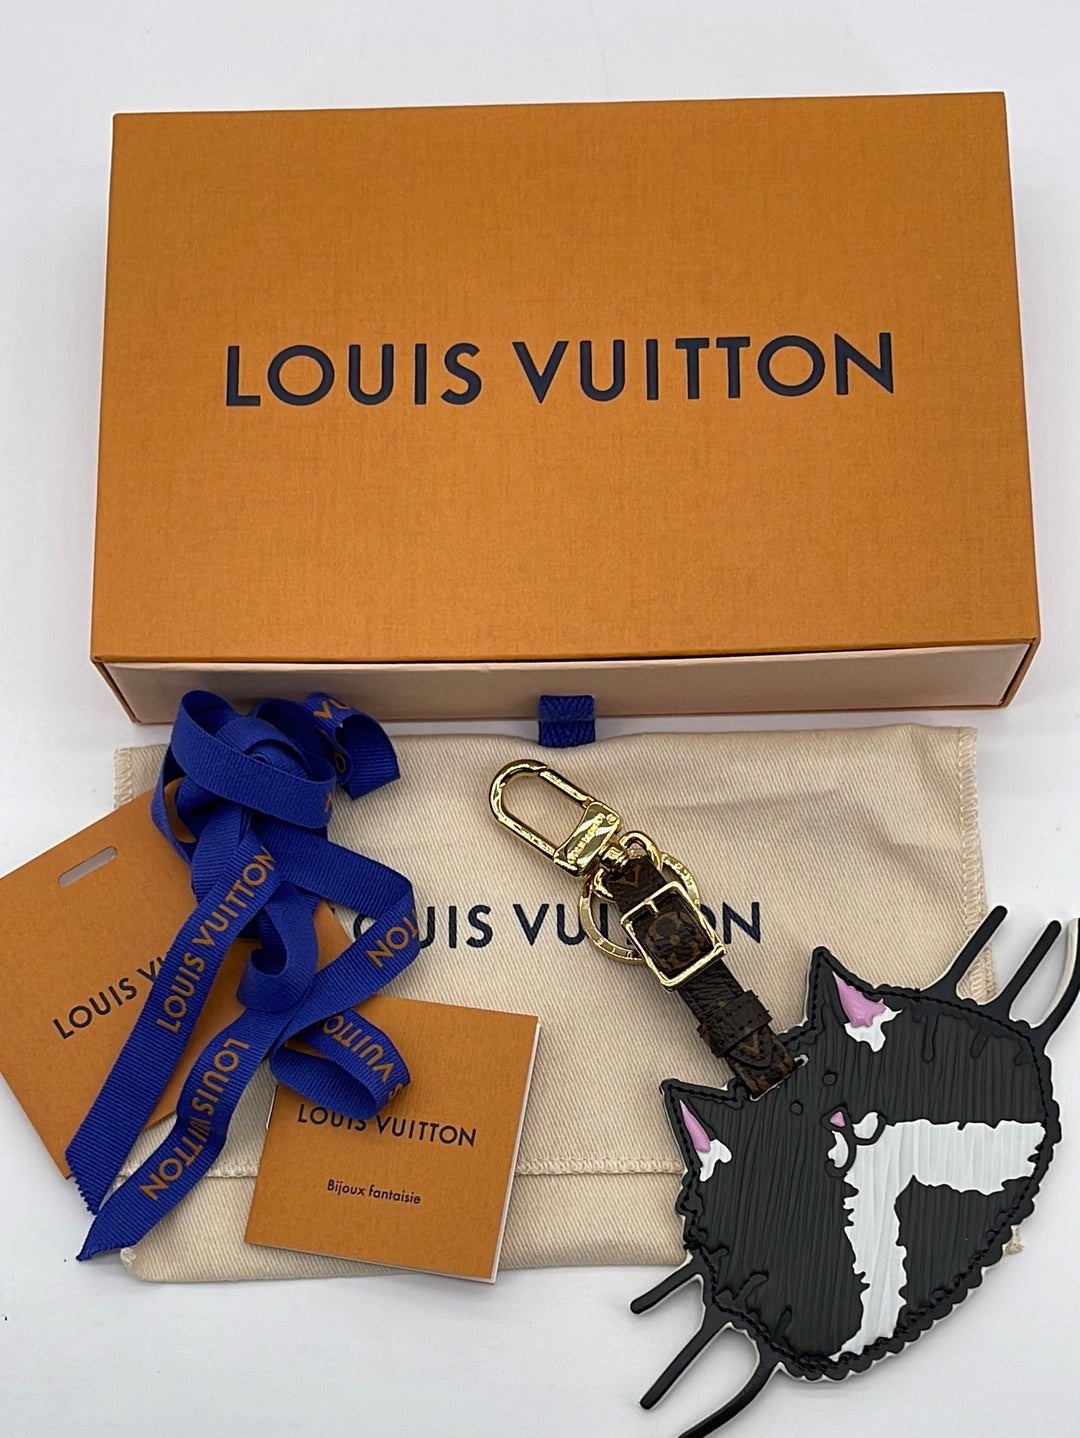 Louis Vuitton Bijoux Fantasie Necklace